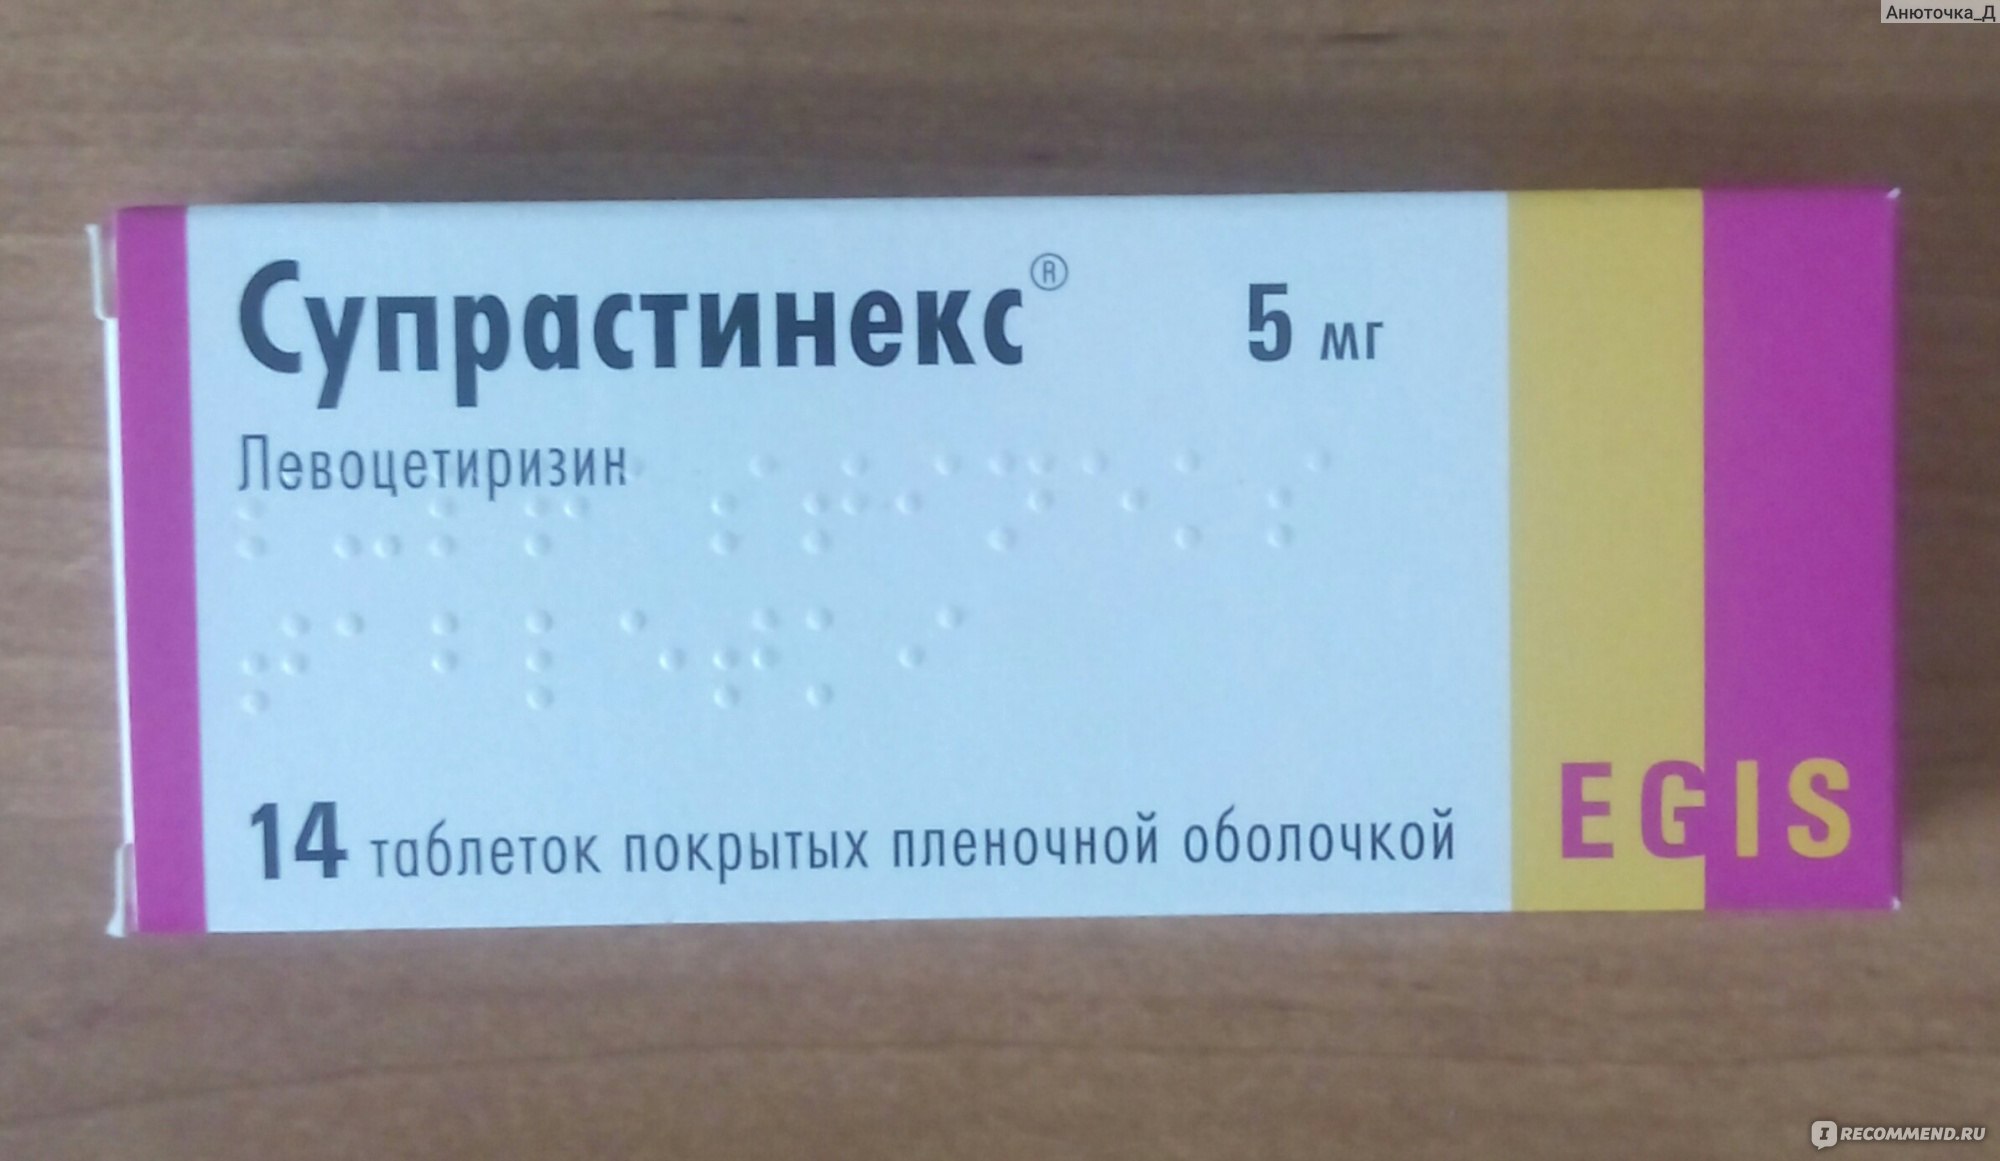 Некст состав таблетки. Супрастин Некст таблетки. Супрастинекс левоцетиризин. Супрастинекс 5мг n14 таб. ЭГИС. Антигистаминные препараты супрастинекс.